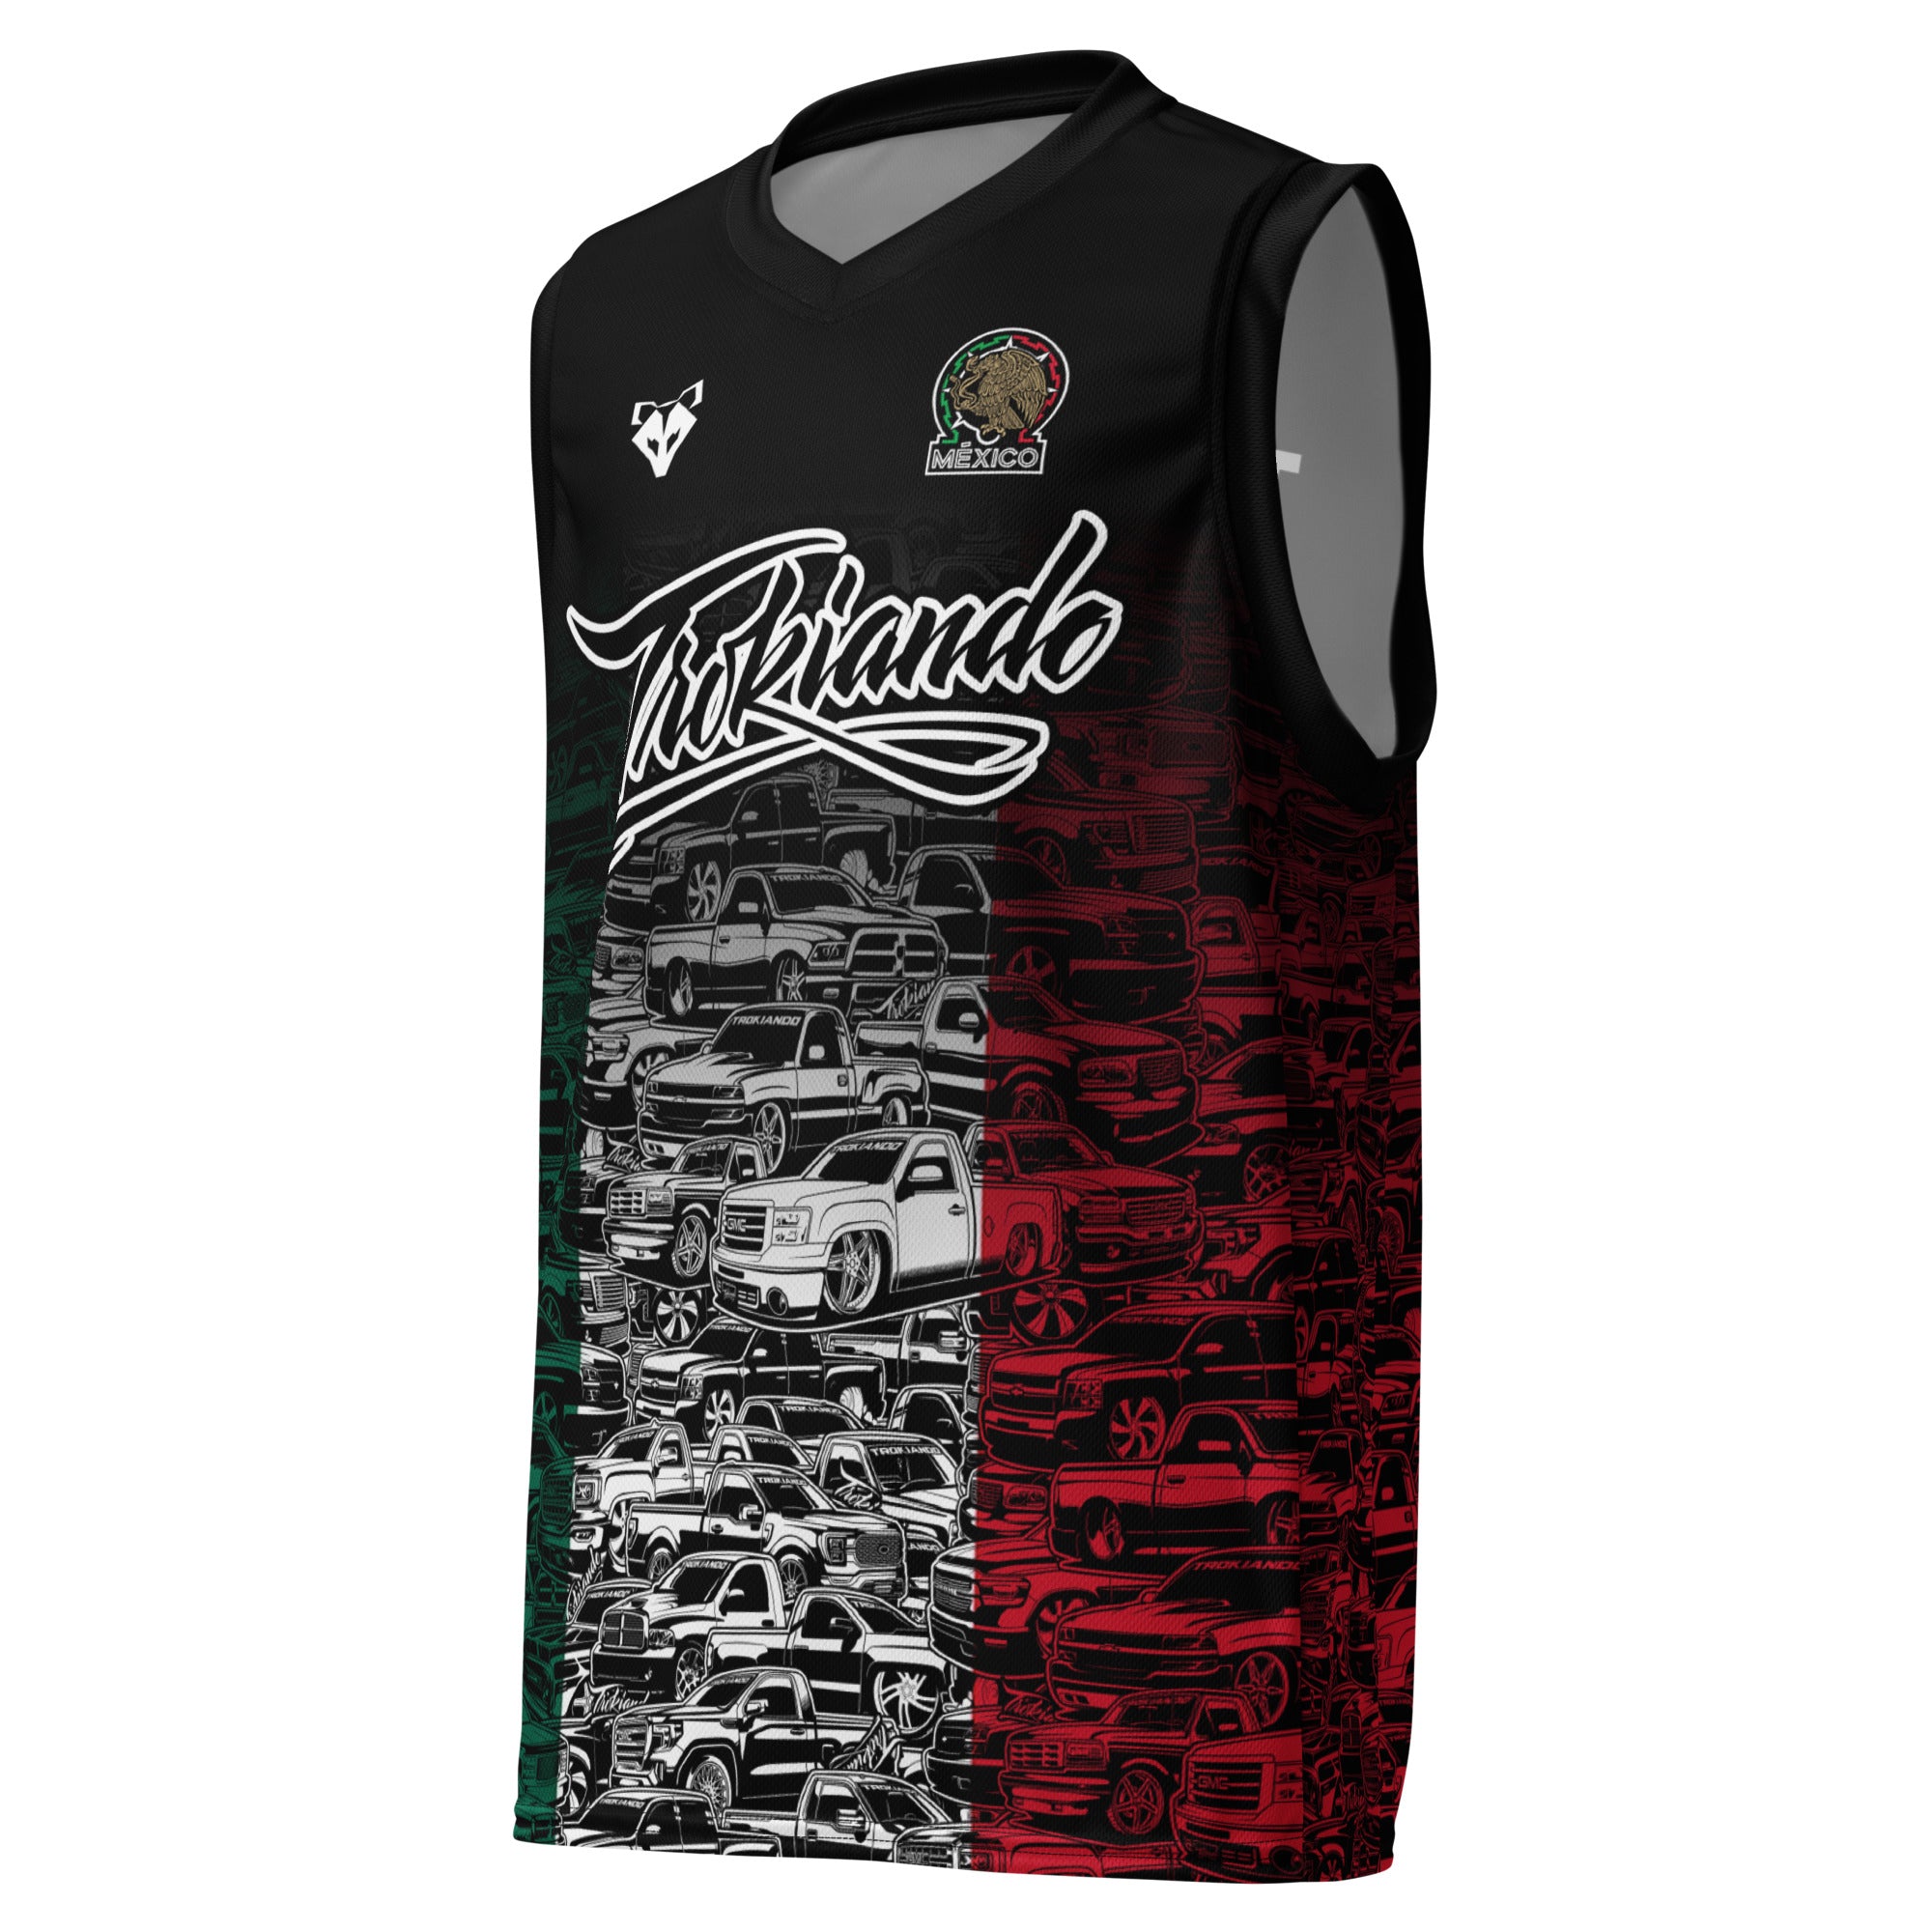 Trokiando Basketball Jersey (MX) M